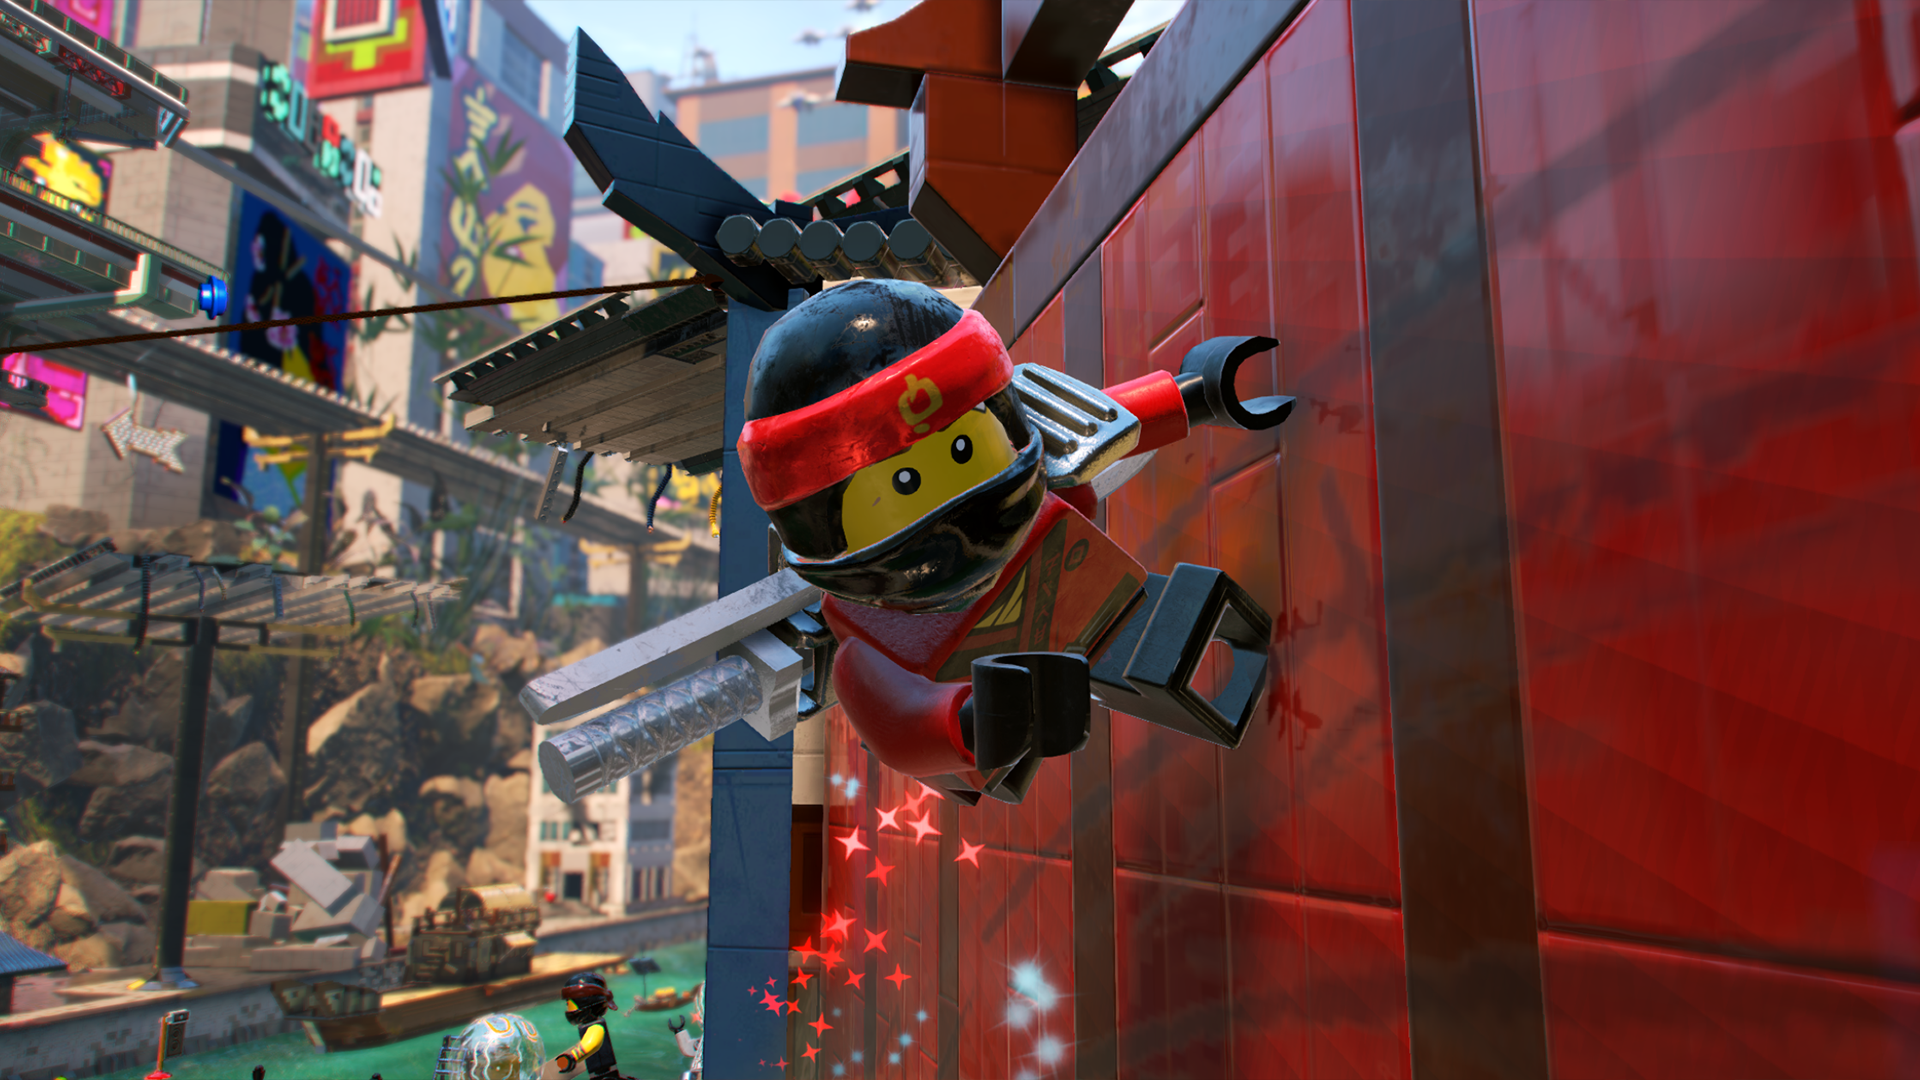 Lego Ninjago character climbing a wall in the videogame.